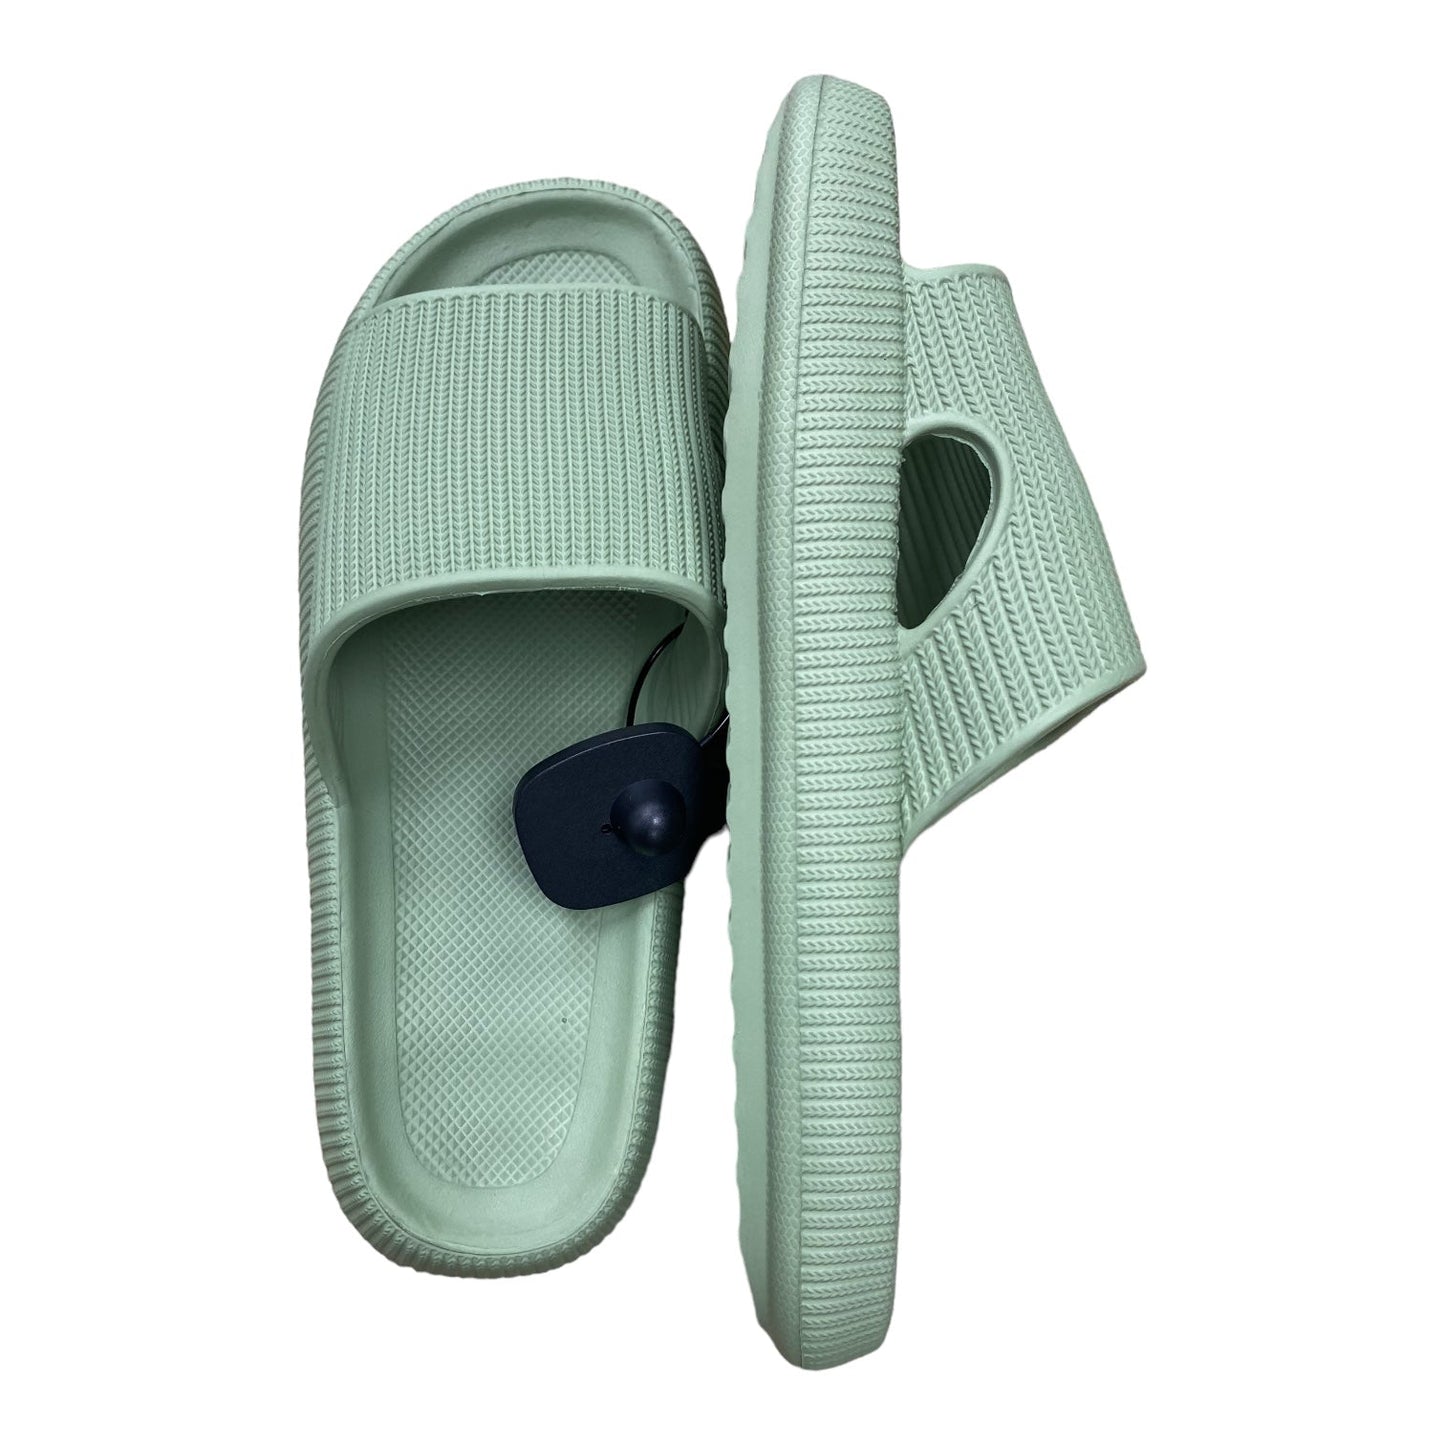 Green Sandals Flats Clothes Mentor, Size 11